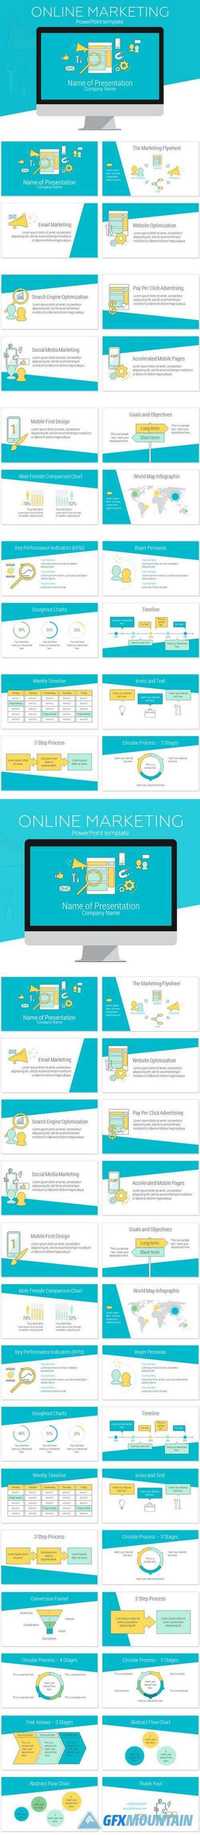 Online Marketing PowerPoint Template 586458